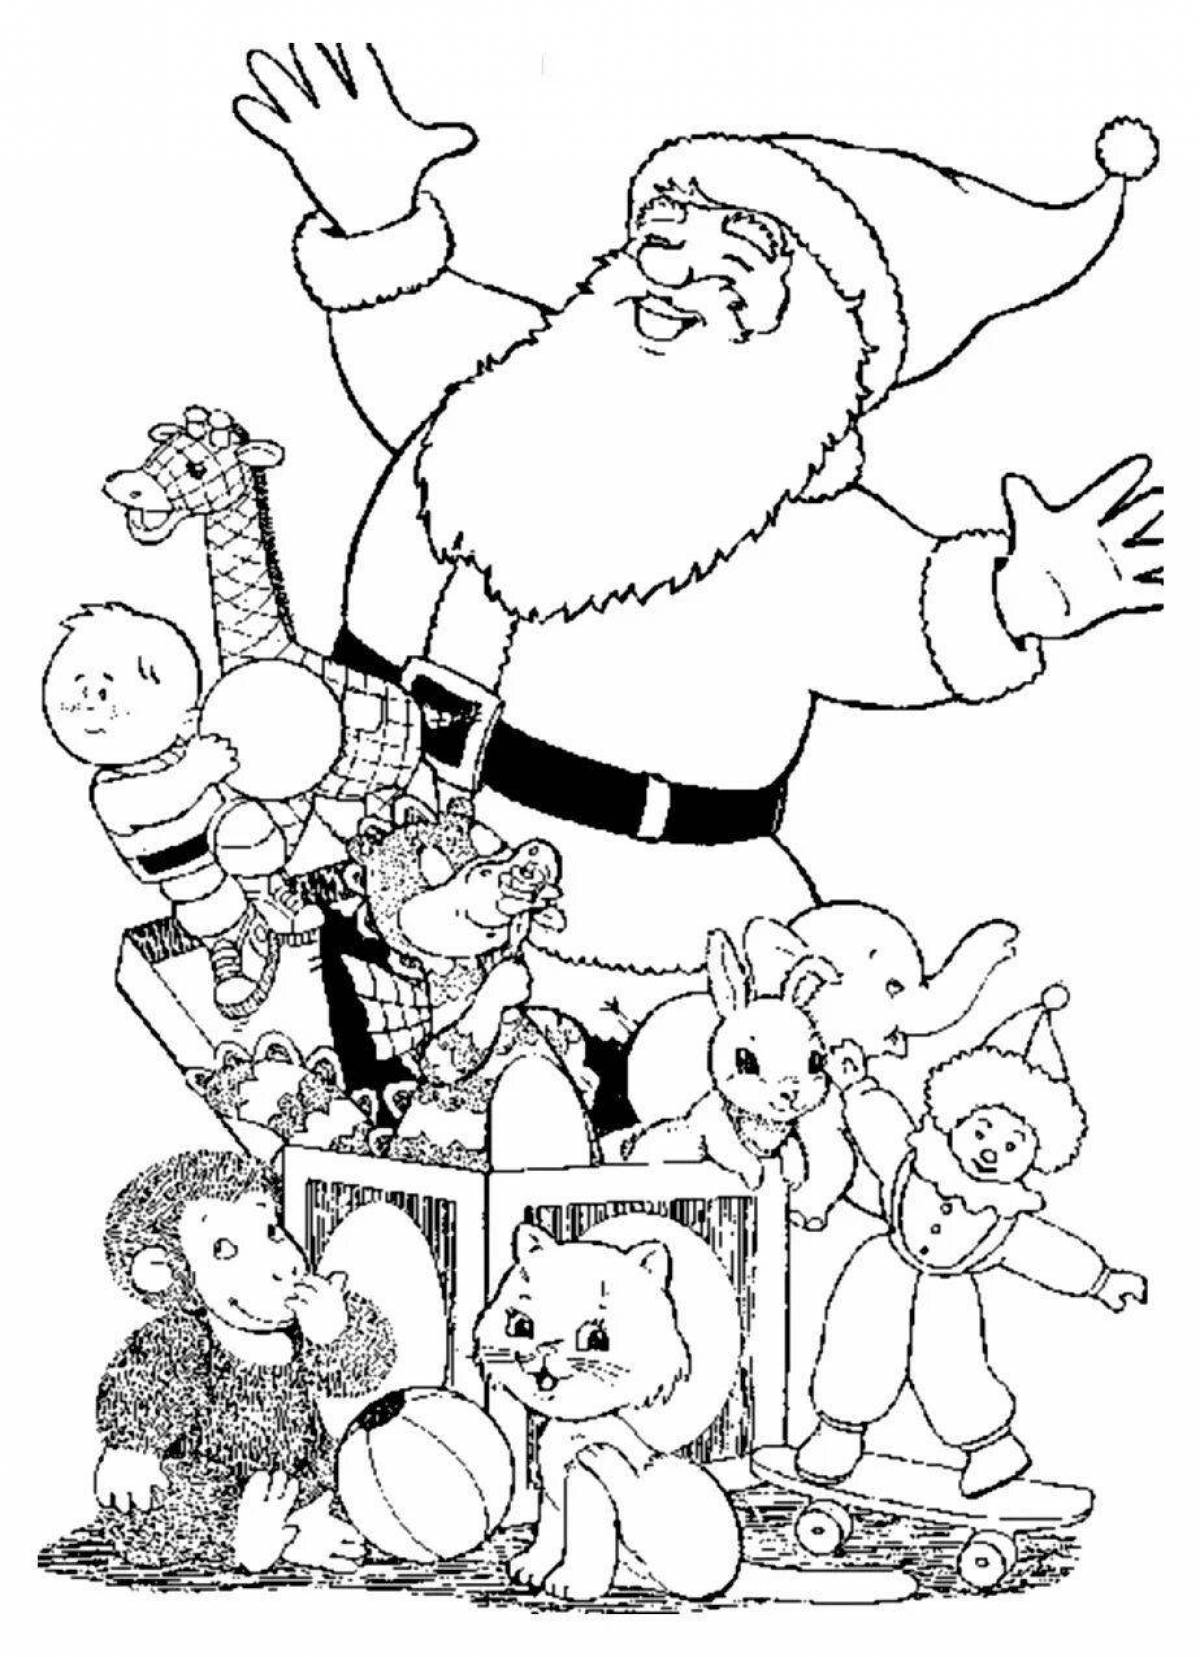 Bright santa claus and animals coloring book